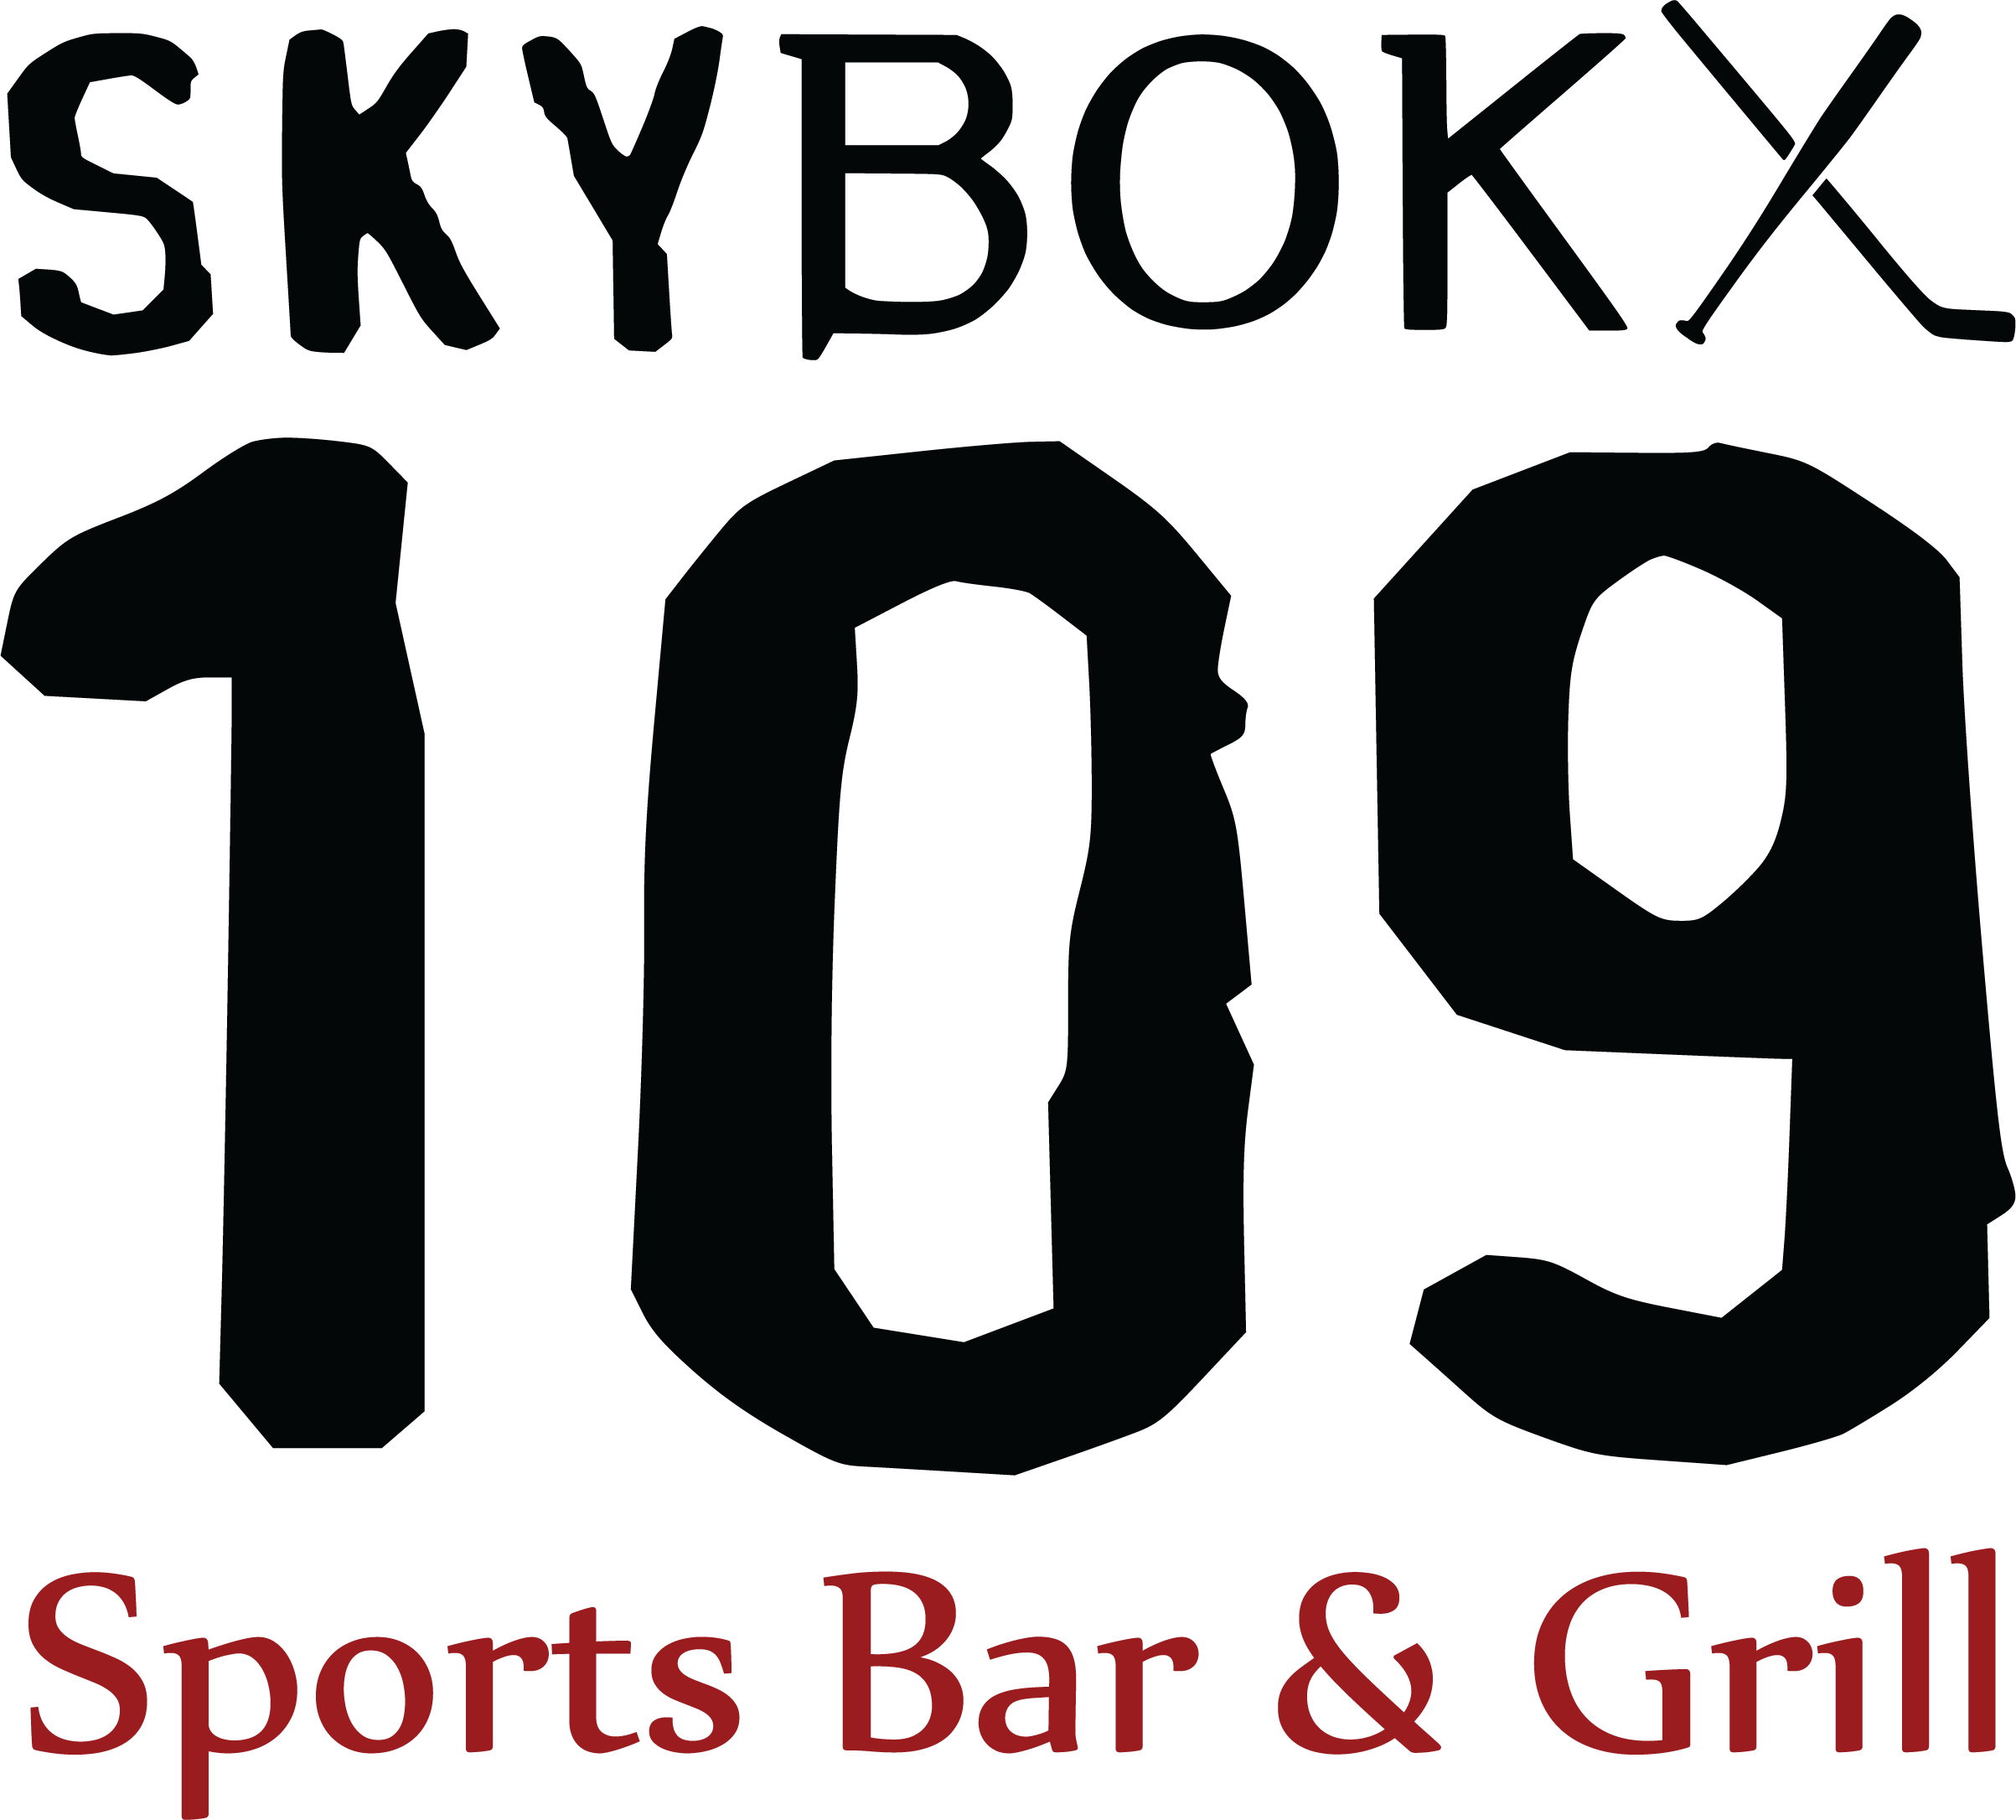 Logo for SKYBOKX 109 Sports Bar & Grill